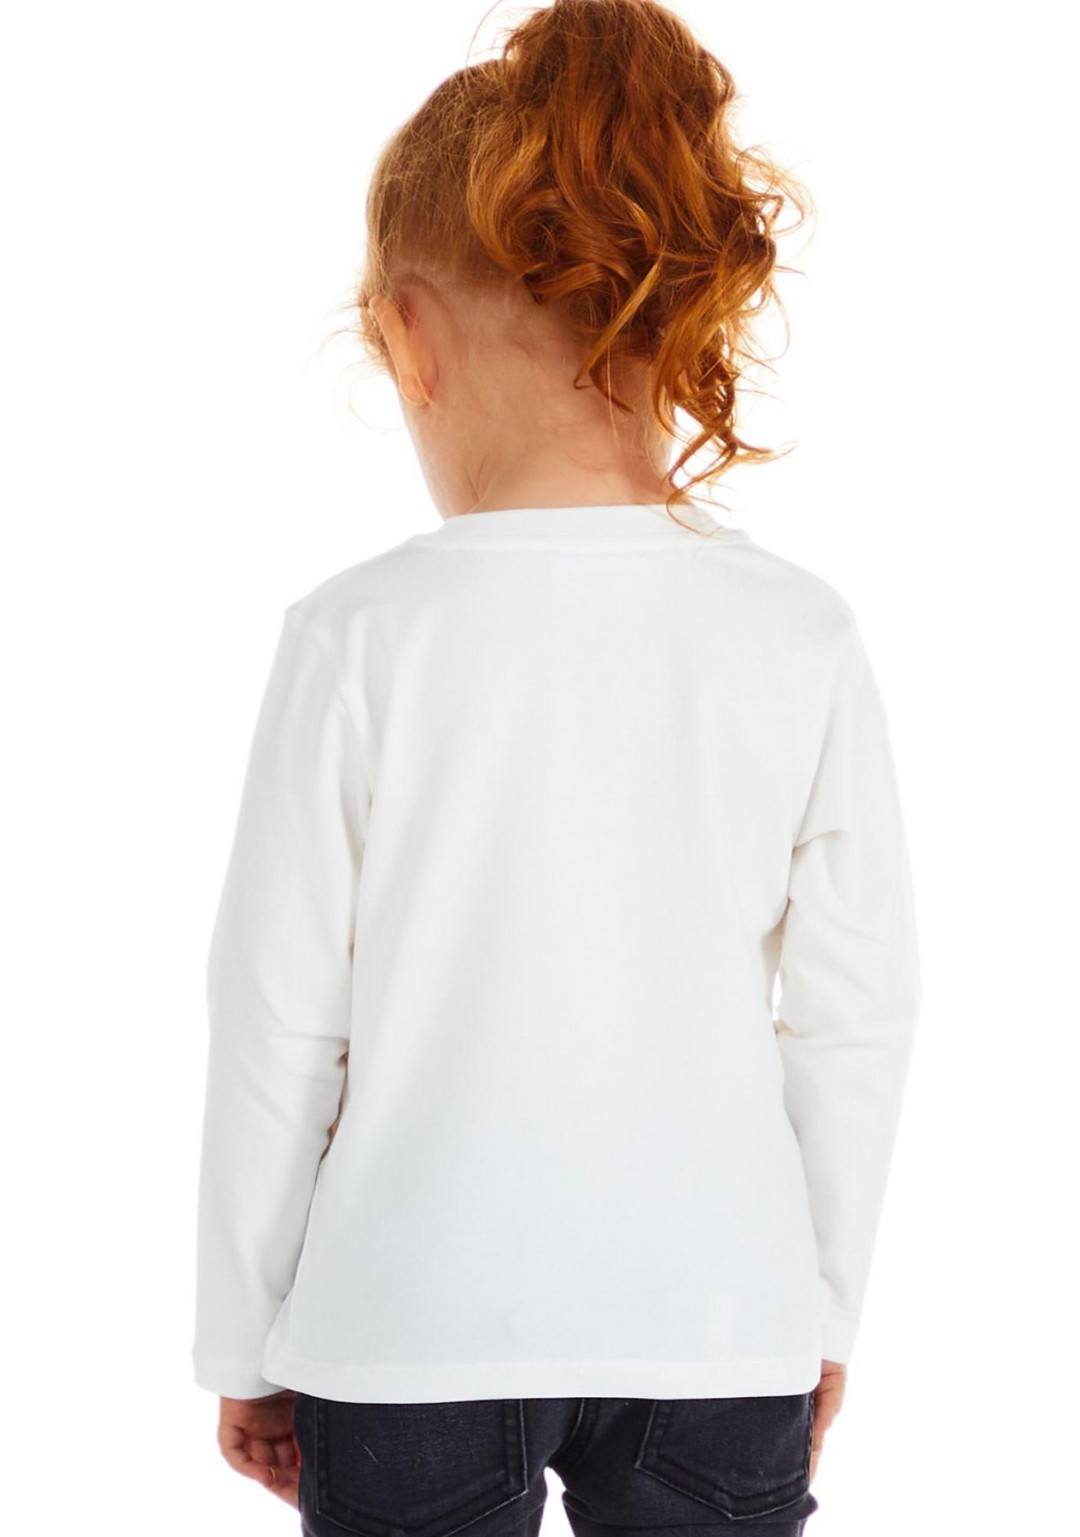 LIU JO - T-shirt Lady - Bambine e ragazze - KF3155 J0088